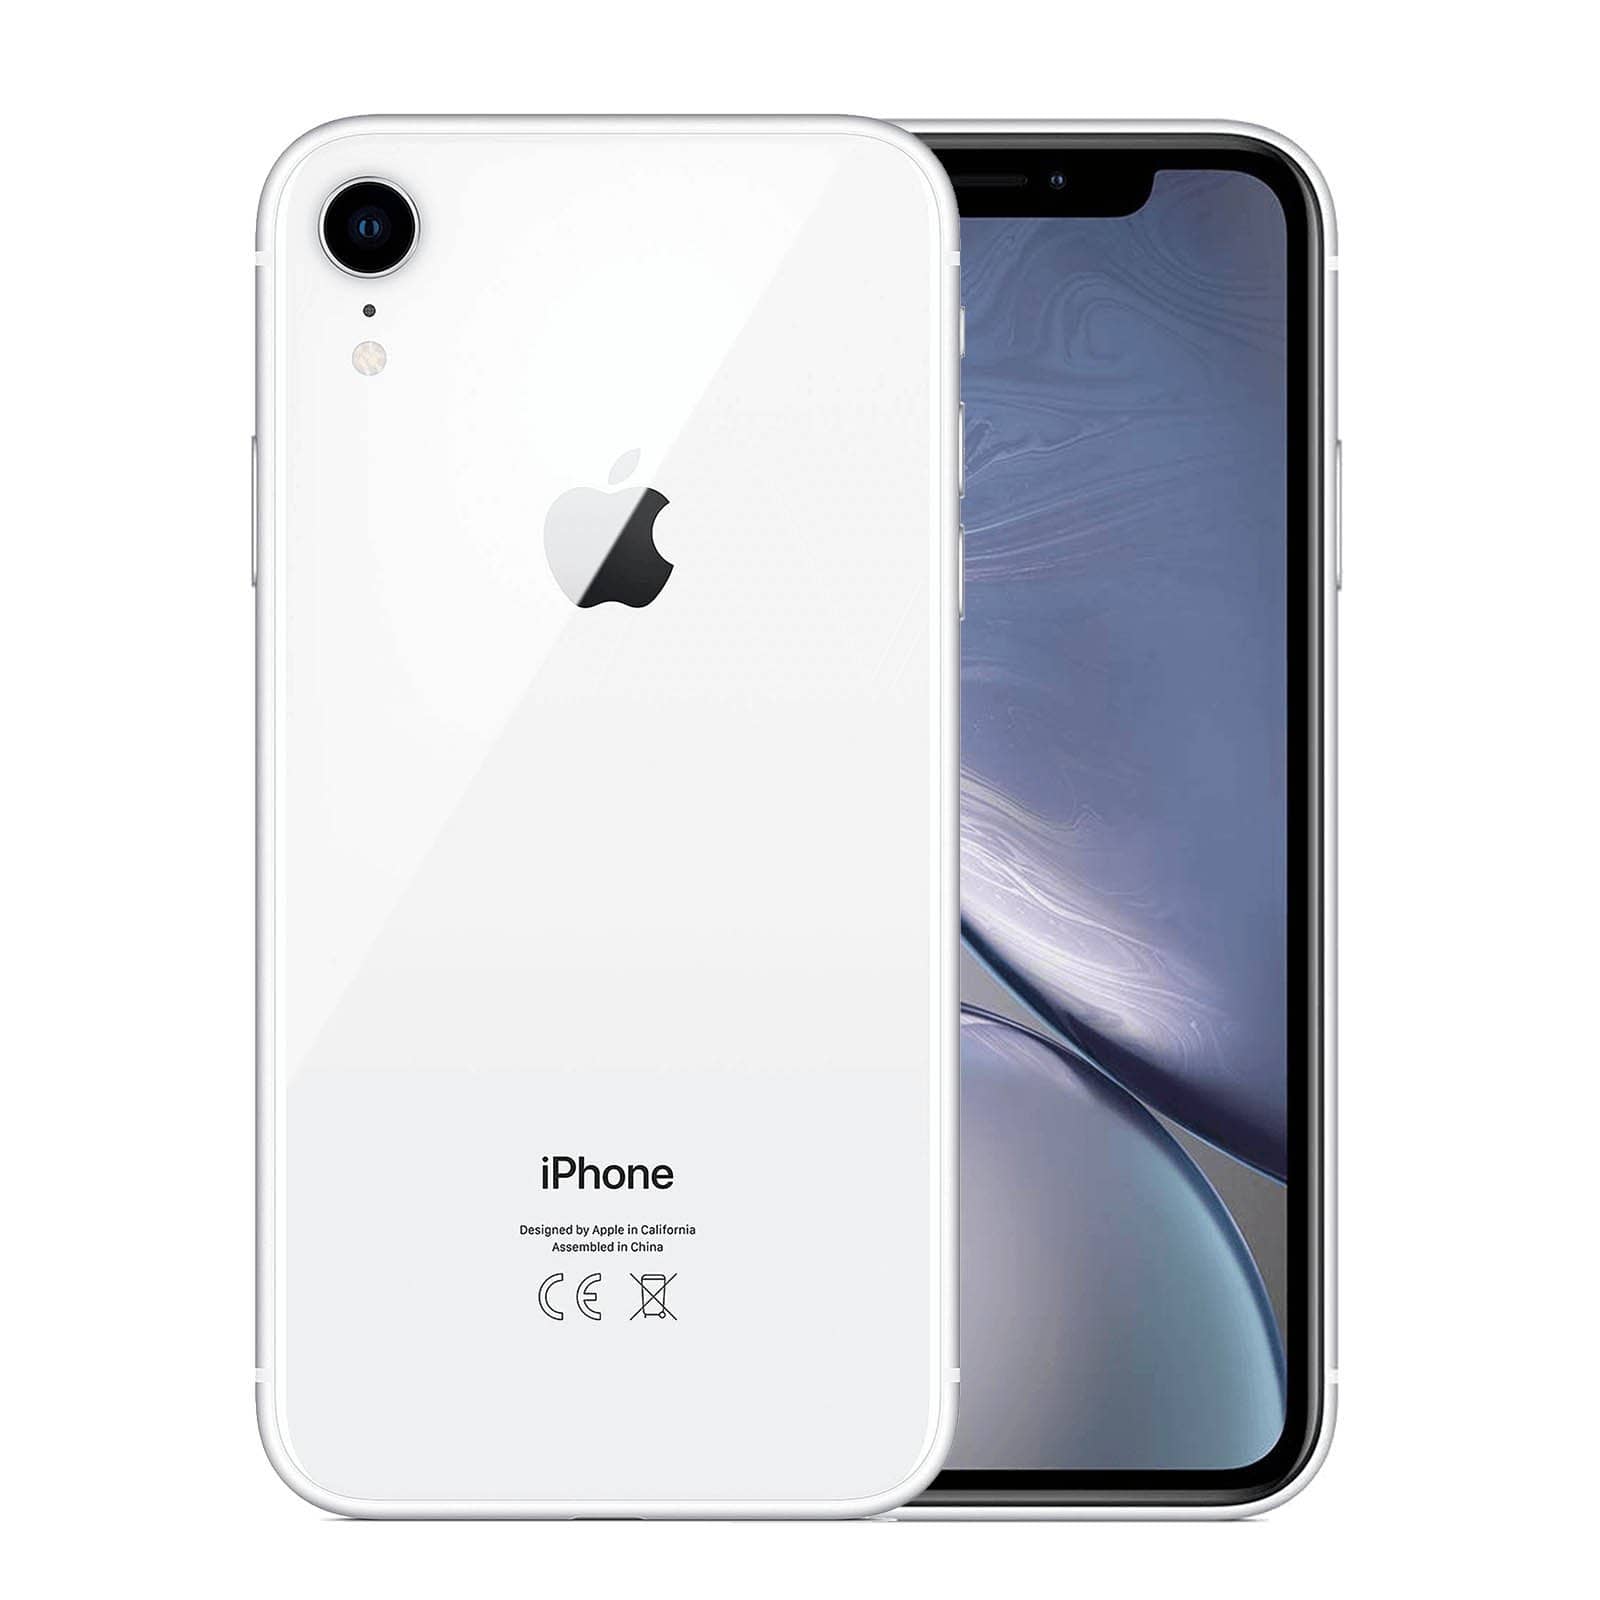 Apple iPhone XR 128GB White Good - Unlocked 128GB White Good